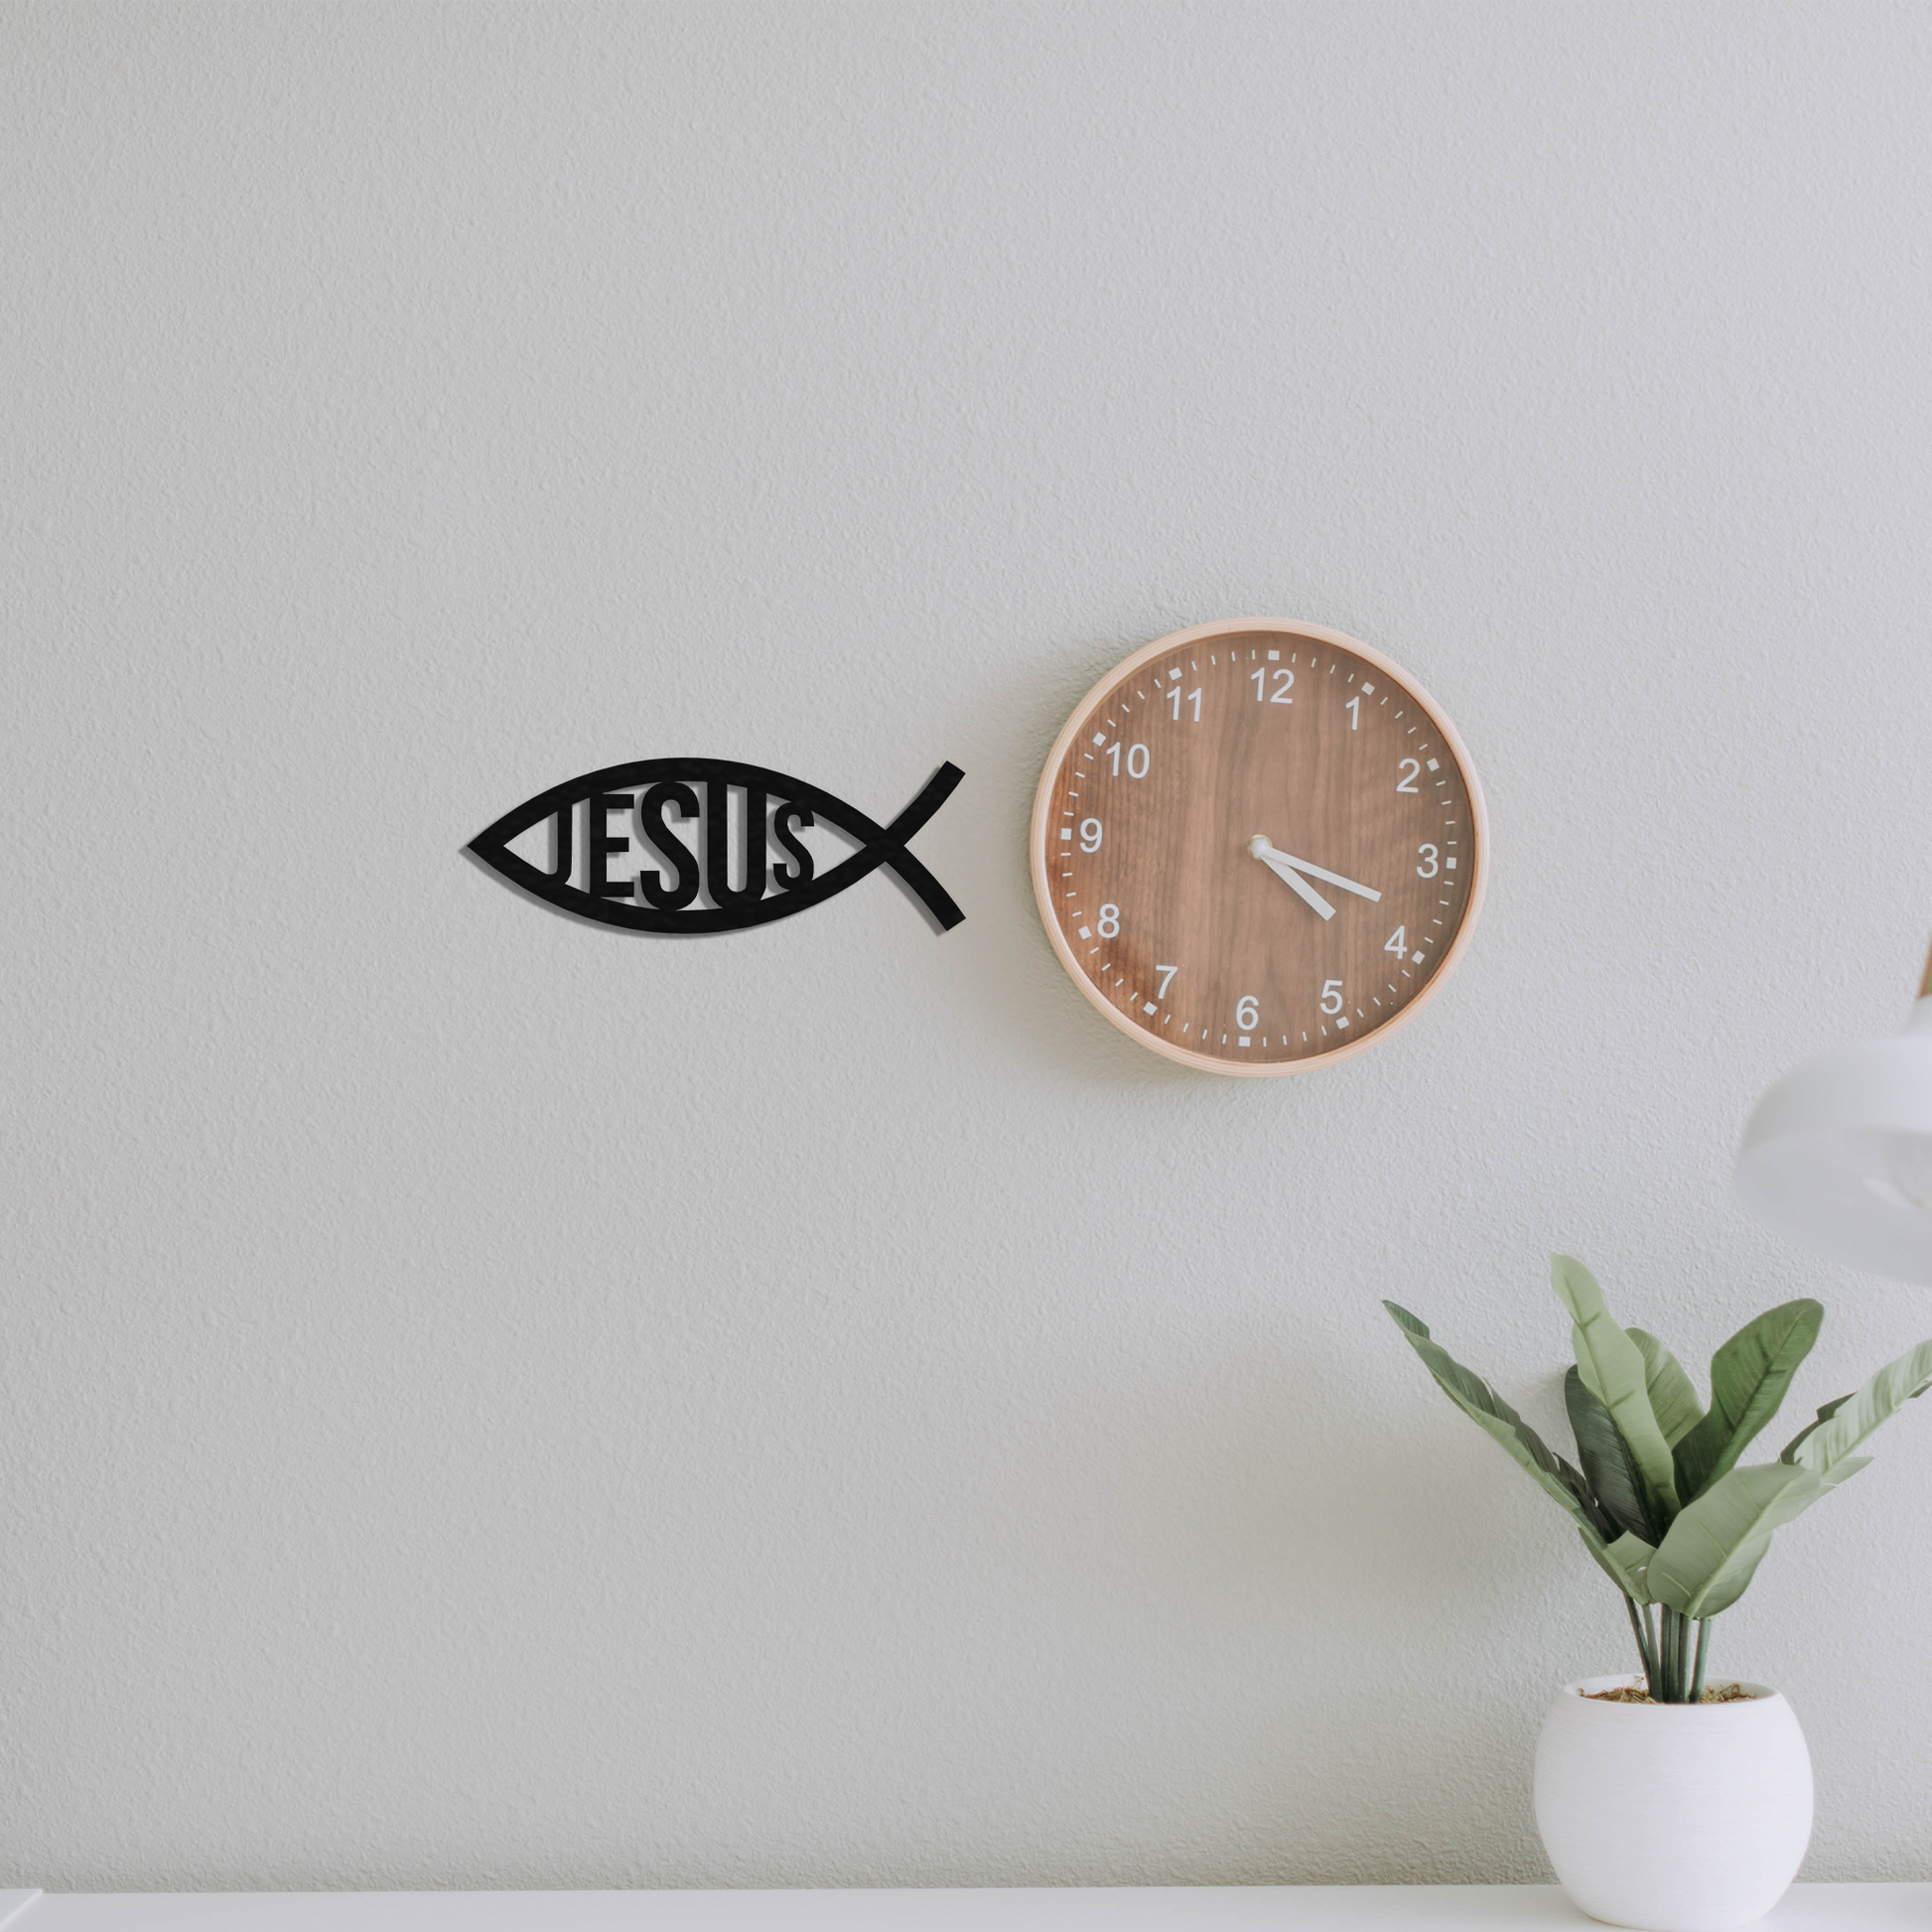 jesus fish metal wall art next to a clock badger steel usa